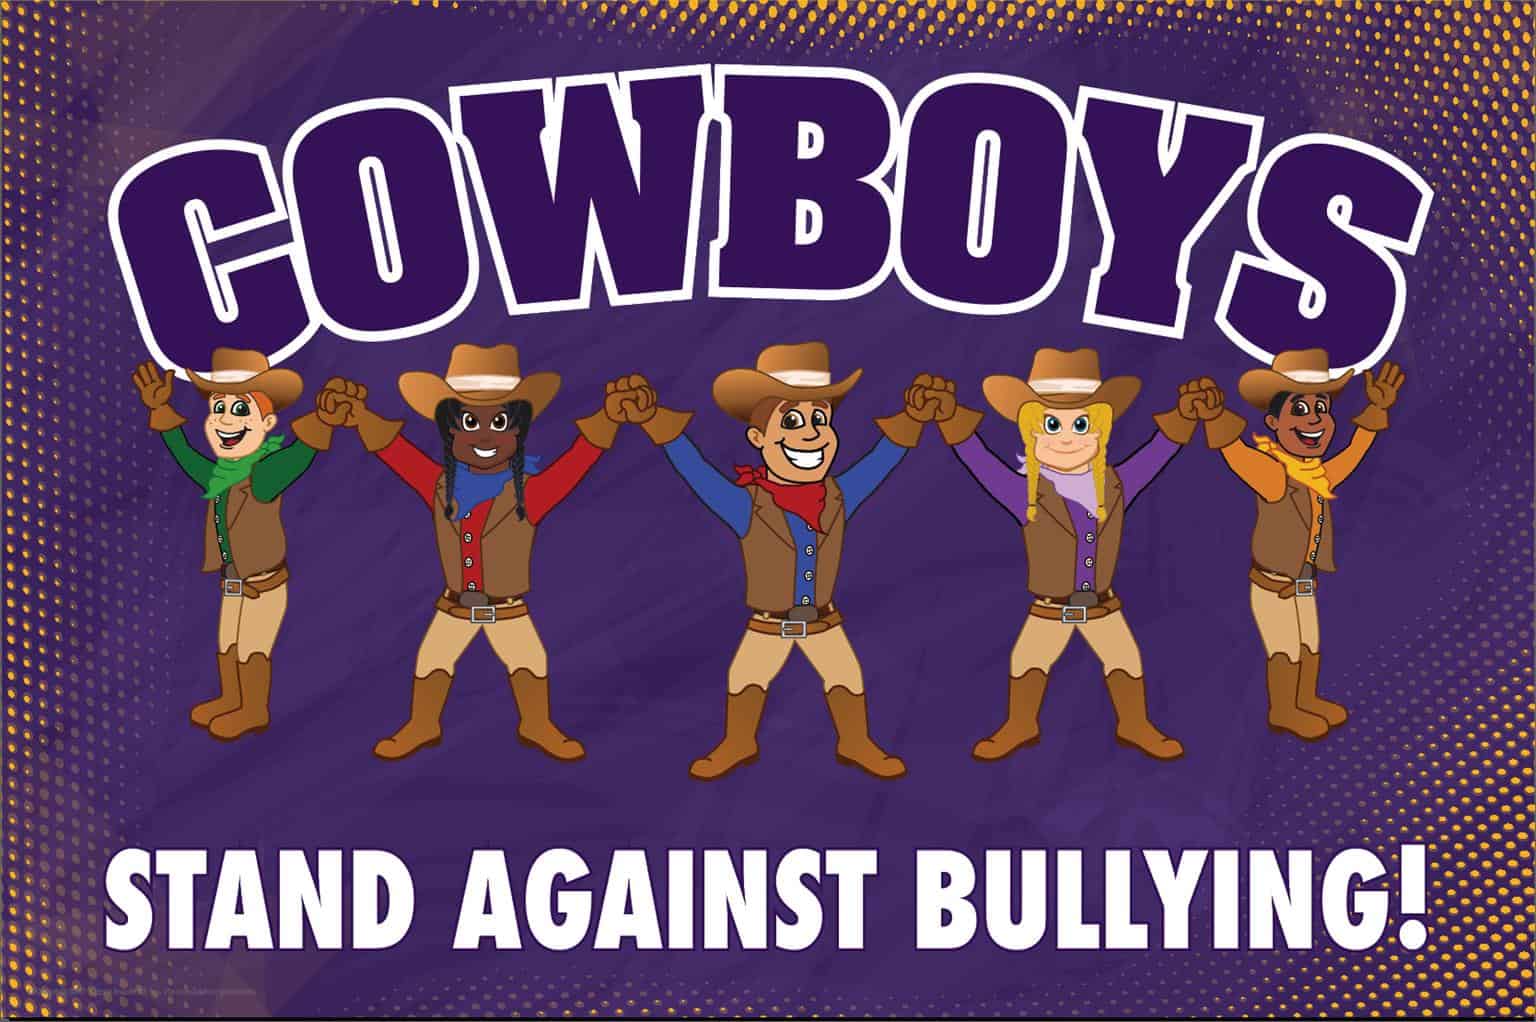 Anti Bullying Poster Cowboys